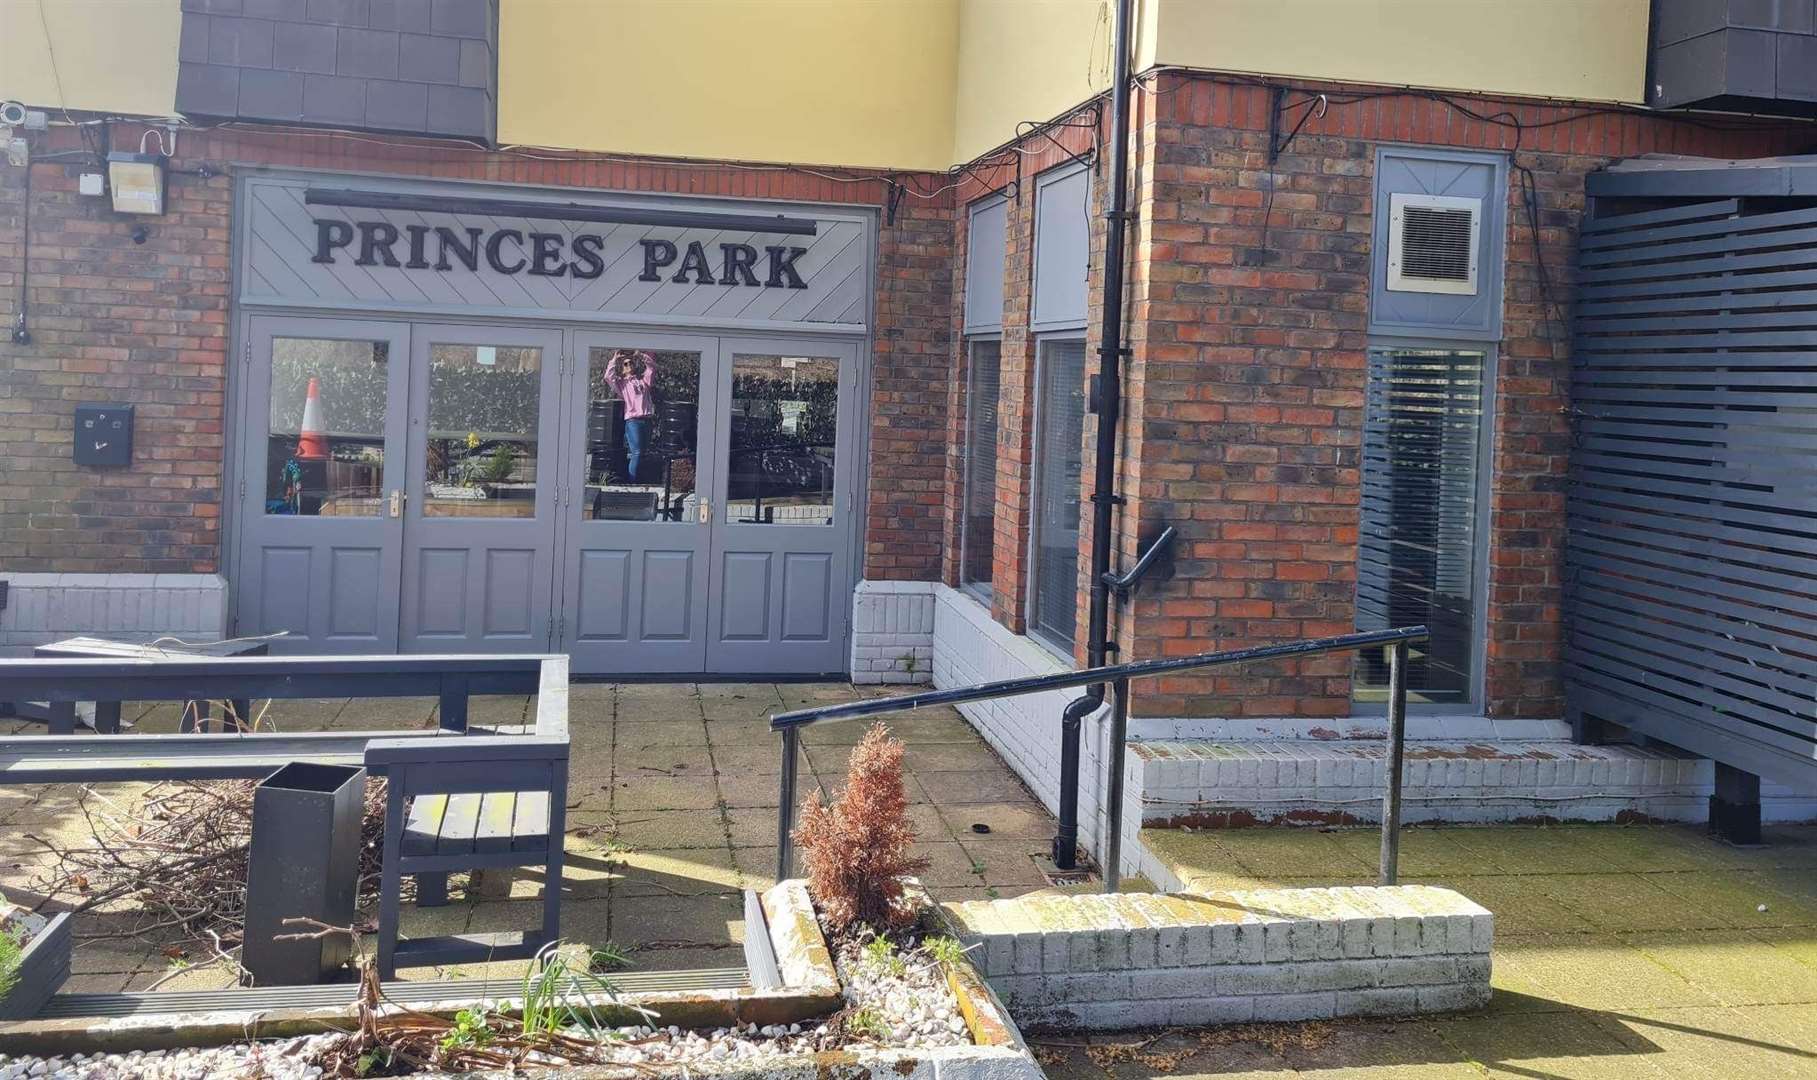 The Princes Park pub has received a massive overhaul